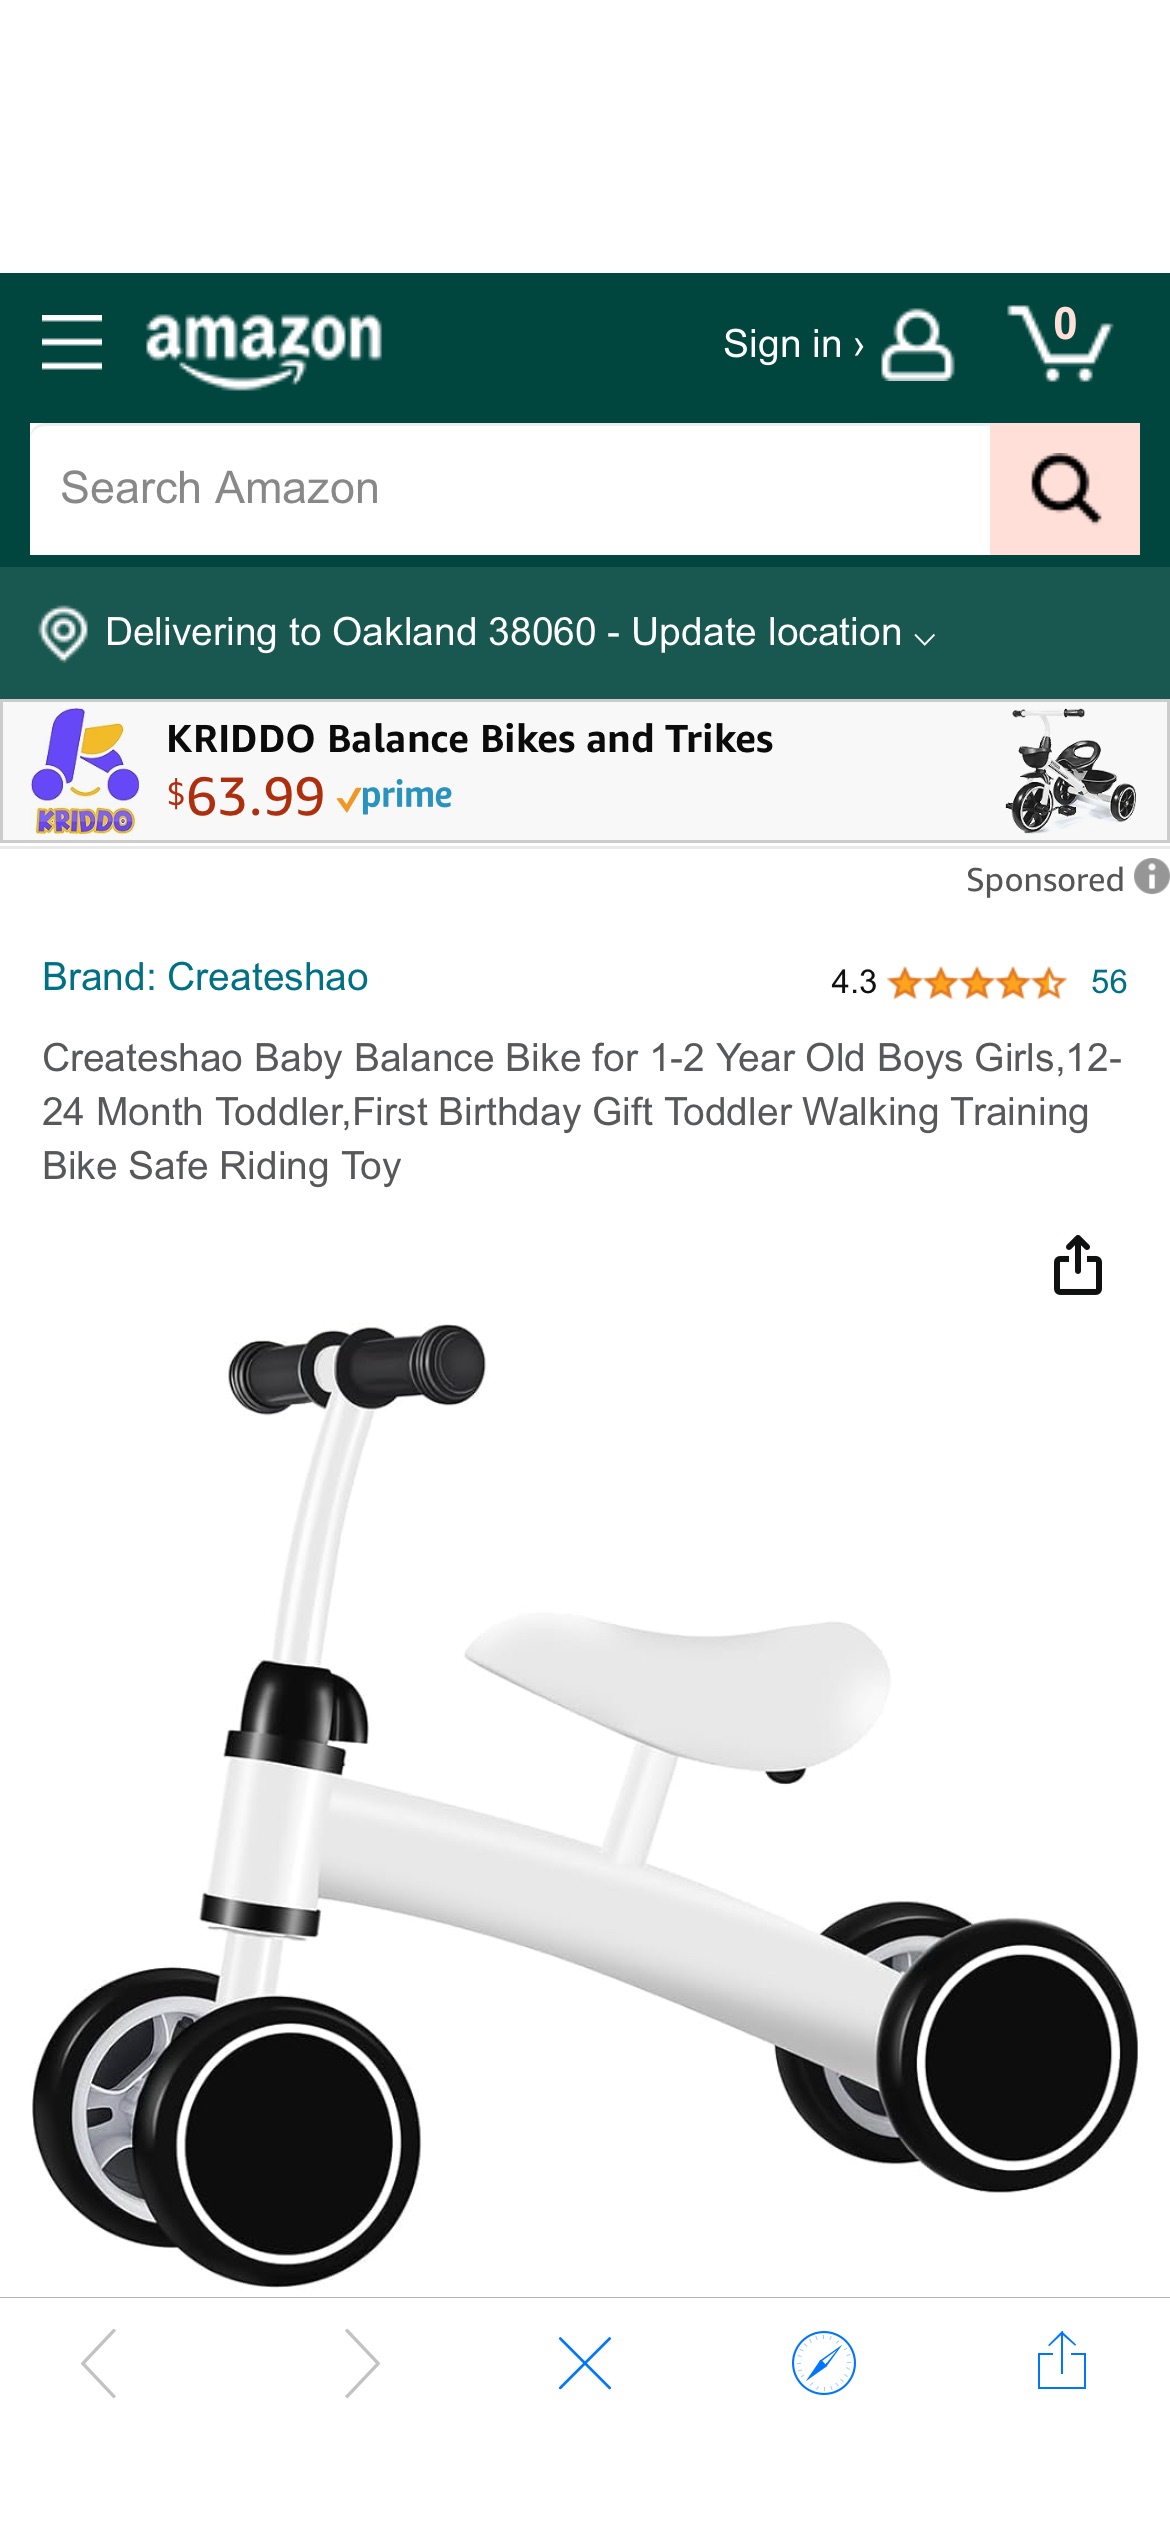 Amazon.com: Createshao Baby Balance Bike for 1-2 Year Old Boys Girls,12-24 Month Toddler,First Birthday Gift Toddler Walking Training Bike Safe Riding Toy (White Black) : Toys & Games